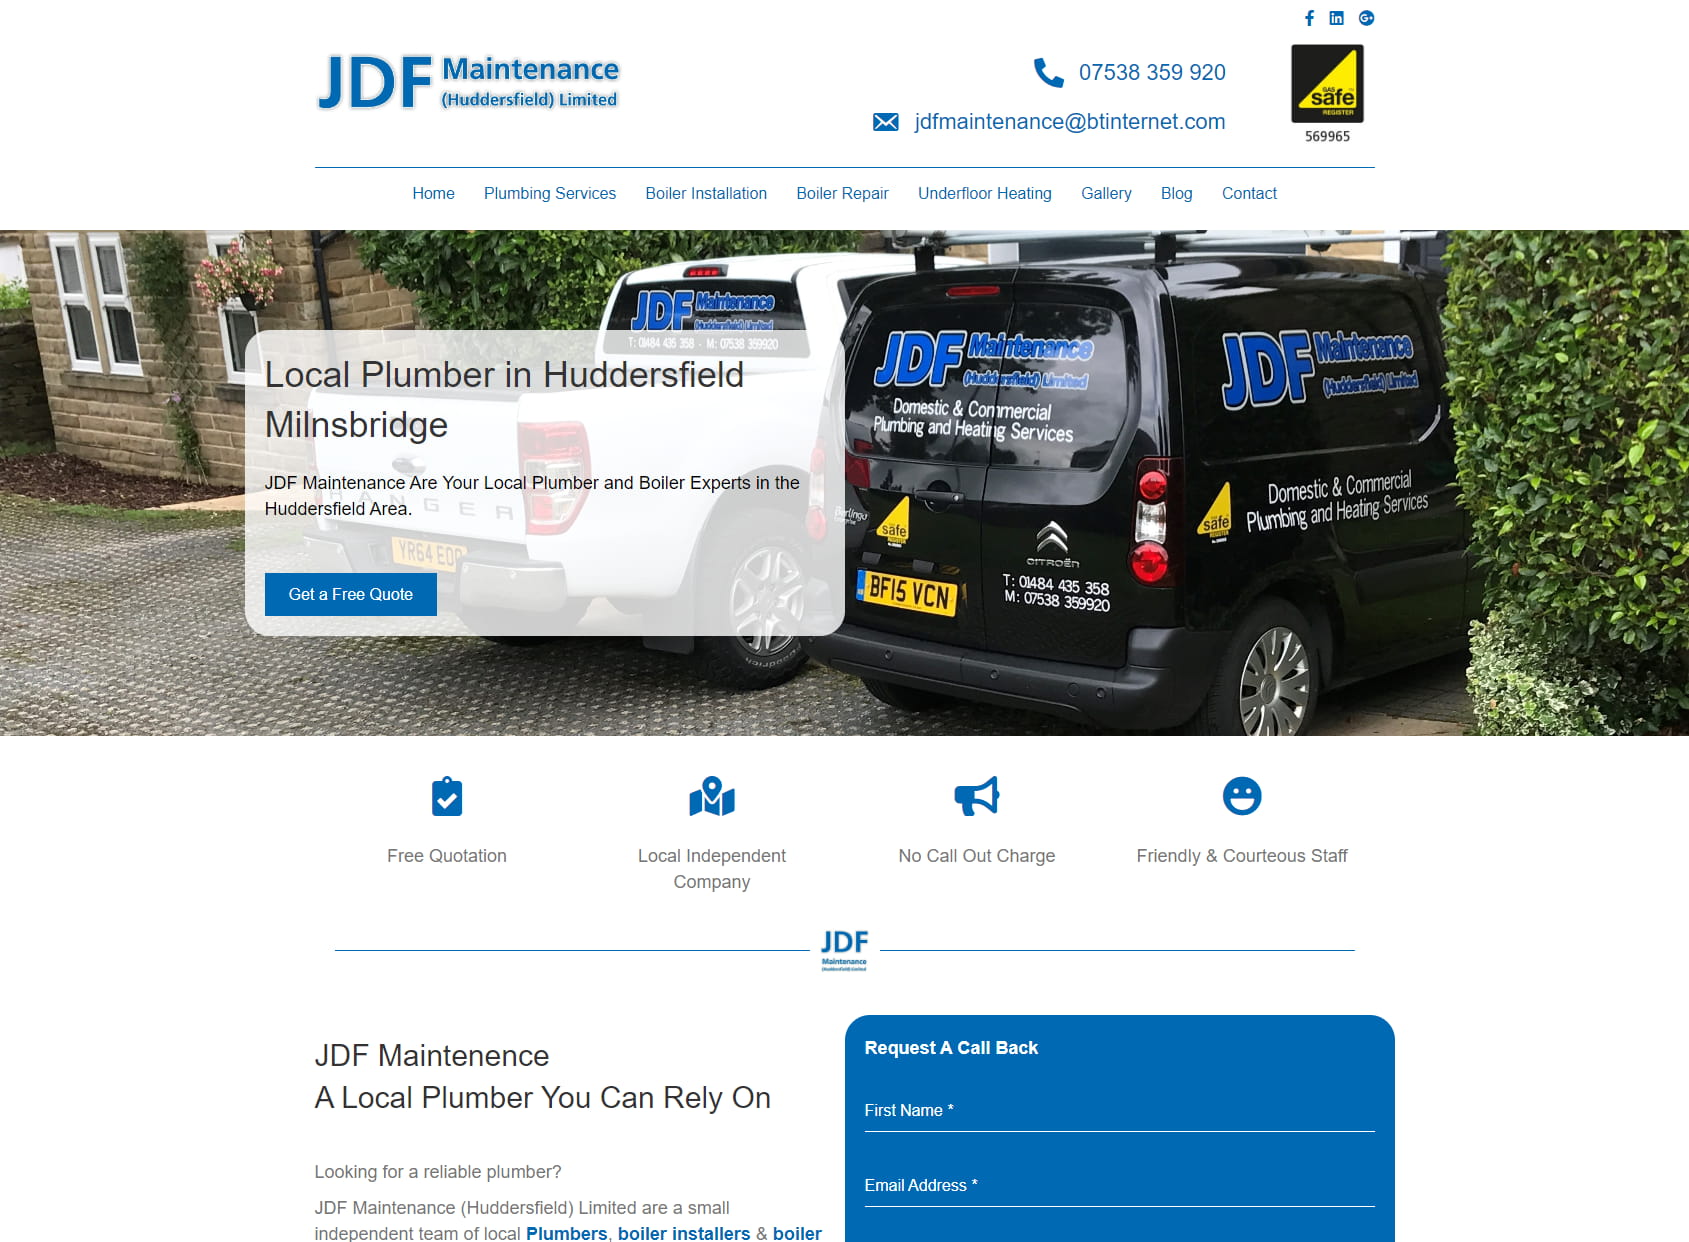 JDF Maintenance (Huddersfield) Limited